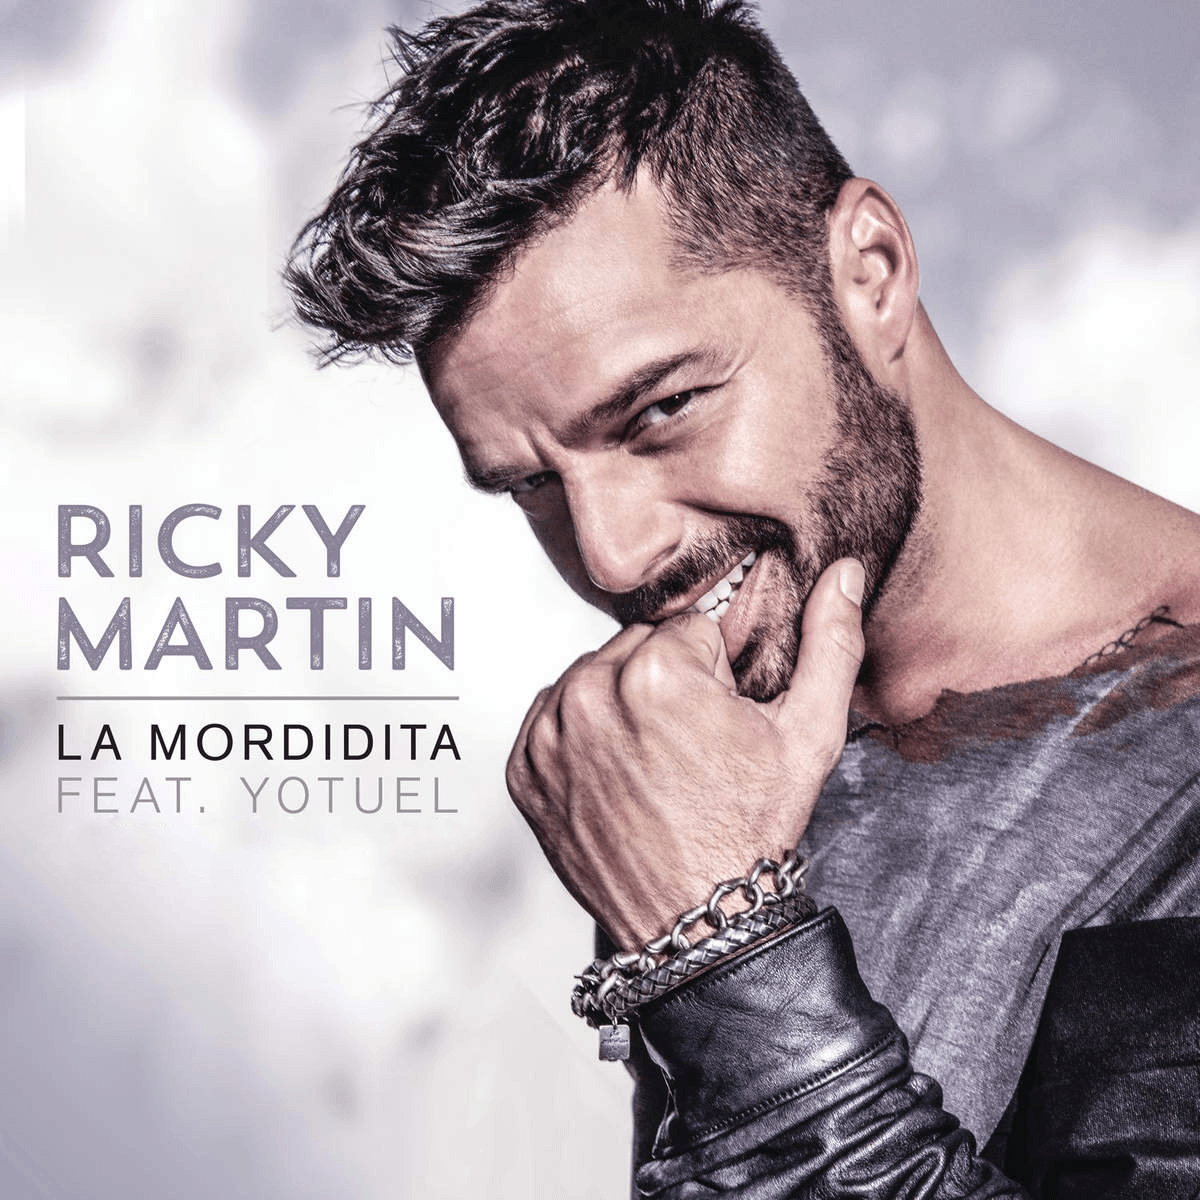 Ricky Martin Wallpaper HD Background